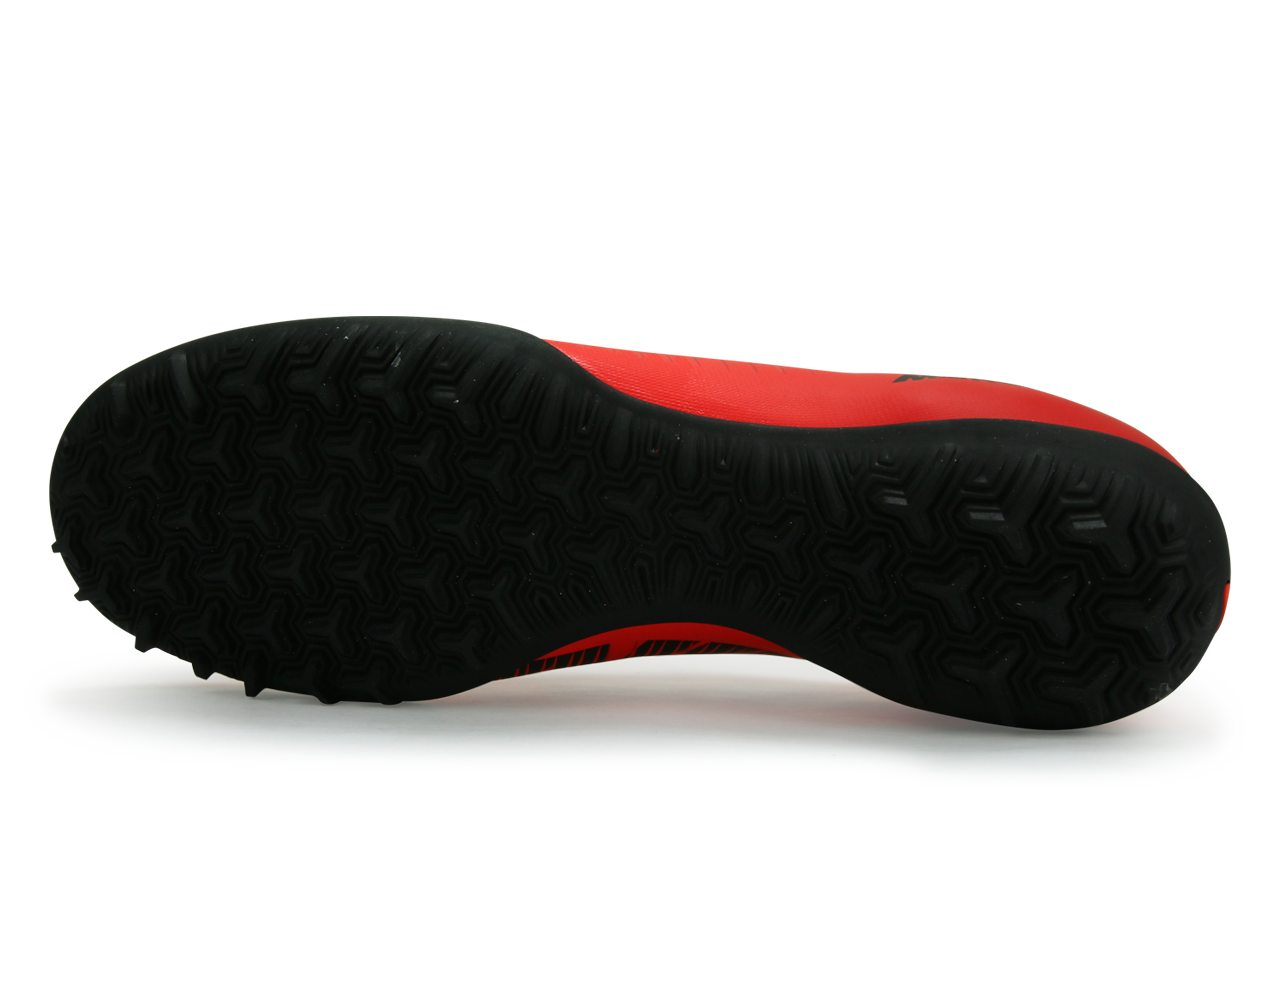 Nike Men's MercurialX Victory Turf Soccer Shoes University Red/Black